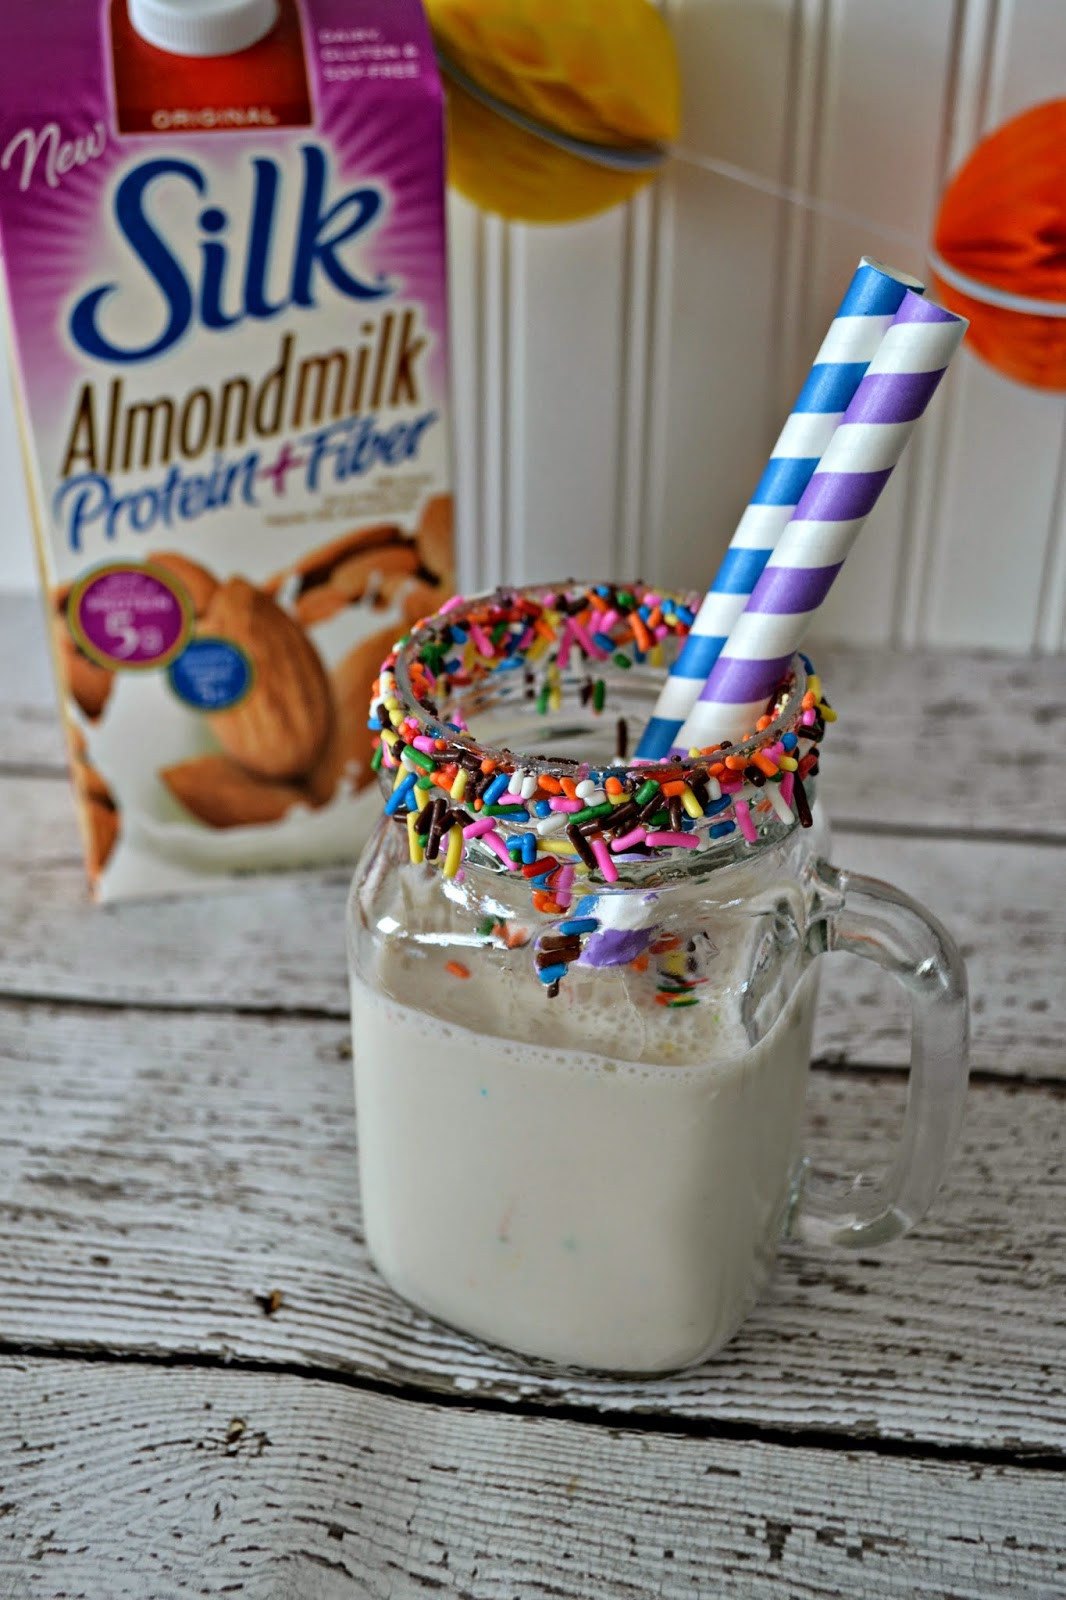 Best ideas about Birthday Cake Shake
. Save or Pin Birthday Cake Milk Shake Recipe with Almond Milk Now.